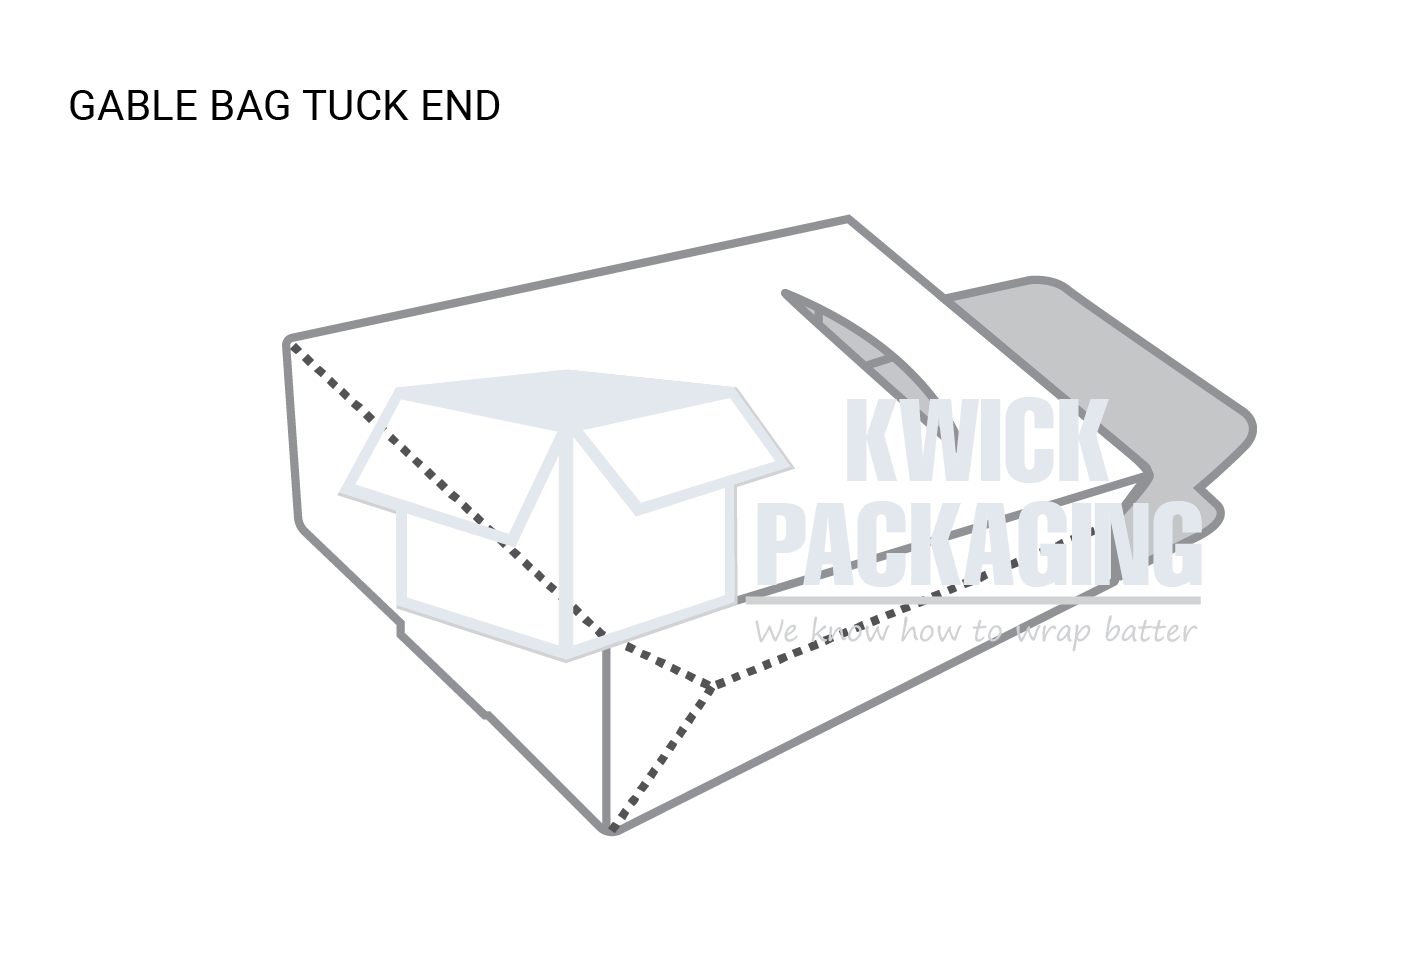 Custom Gable Bag Tuck end Packaging Boxes templates